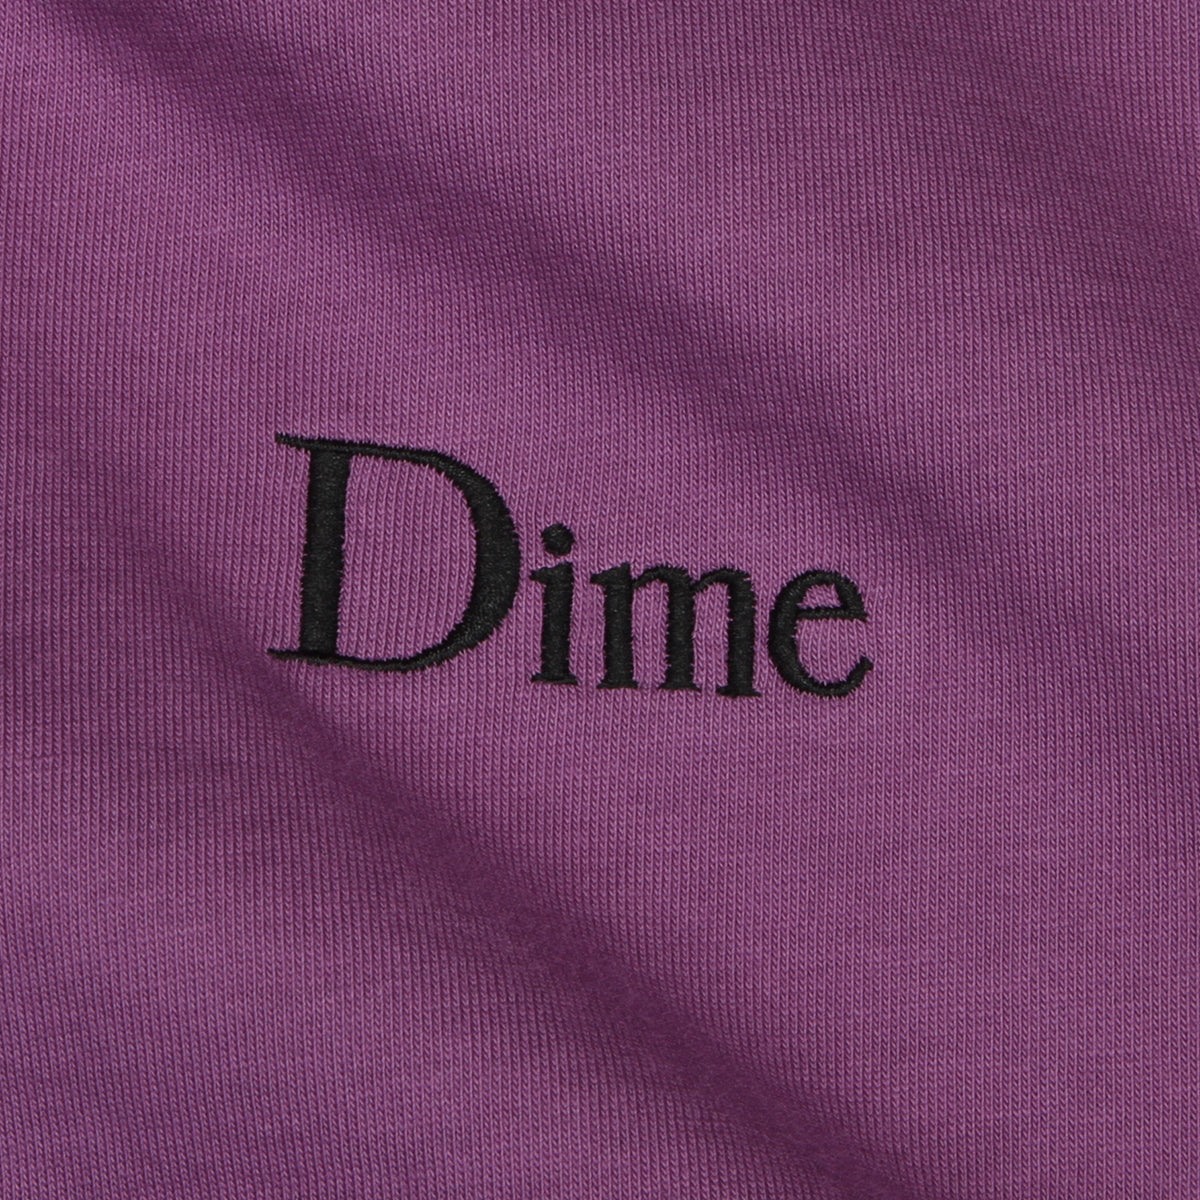 Dime | Classic Small Logo T-Shirt Violet